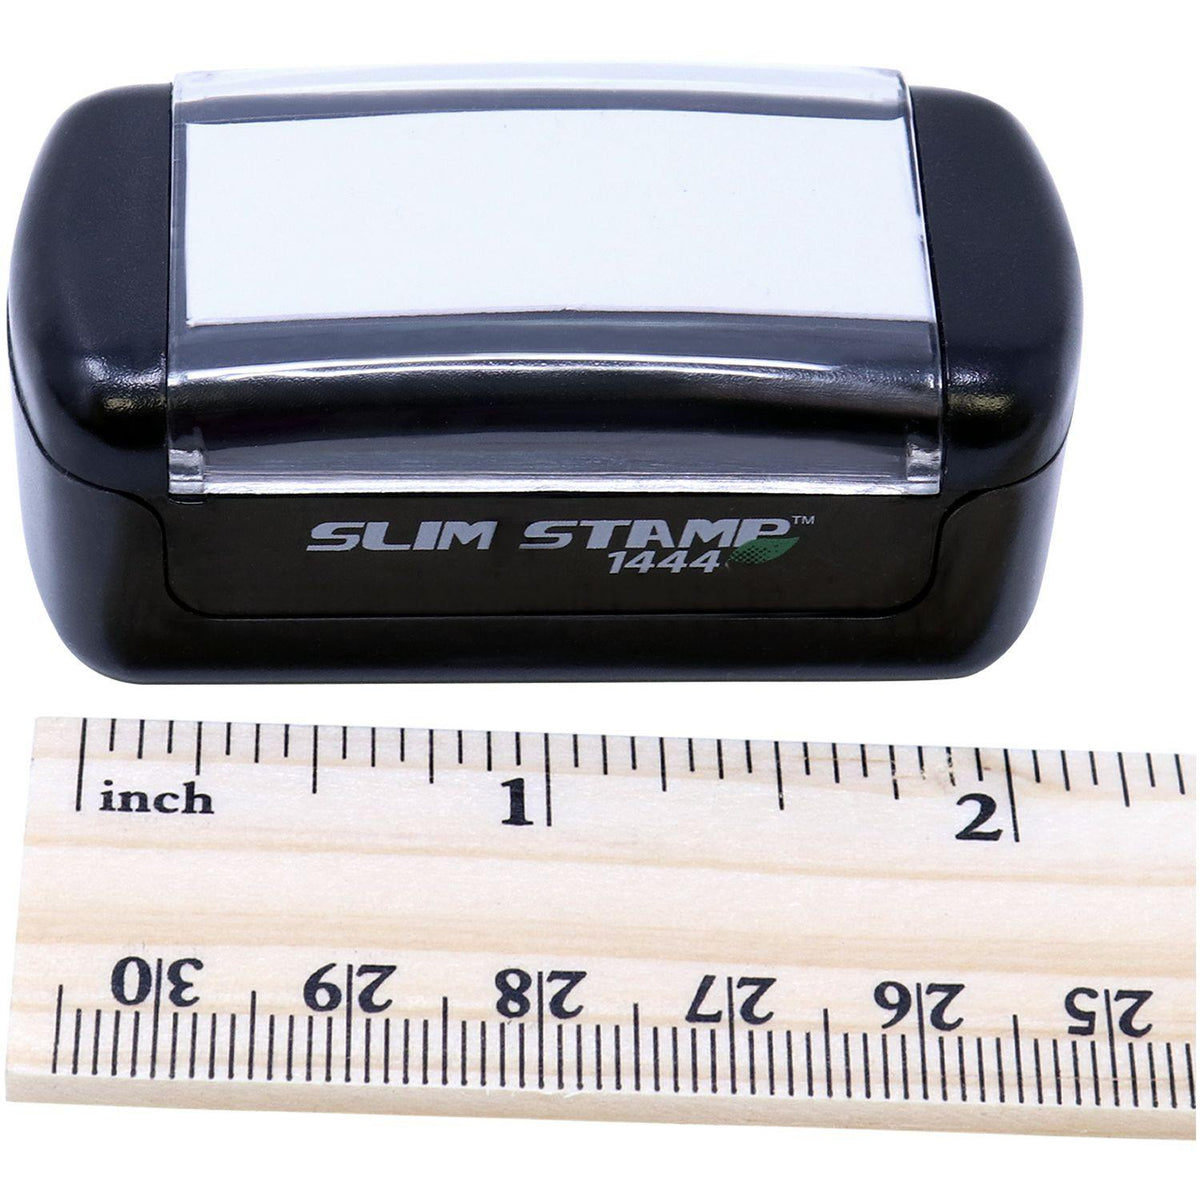 Measurement Slim Pre-Inked Global Express Guaranteed Stamp with Ruler